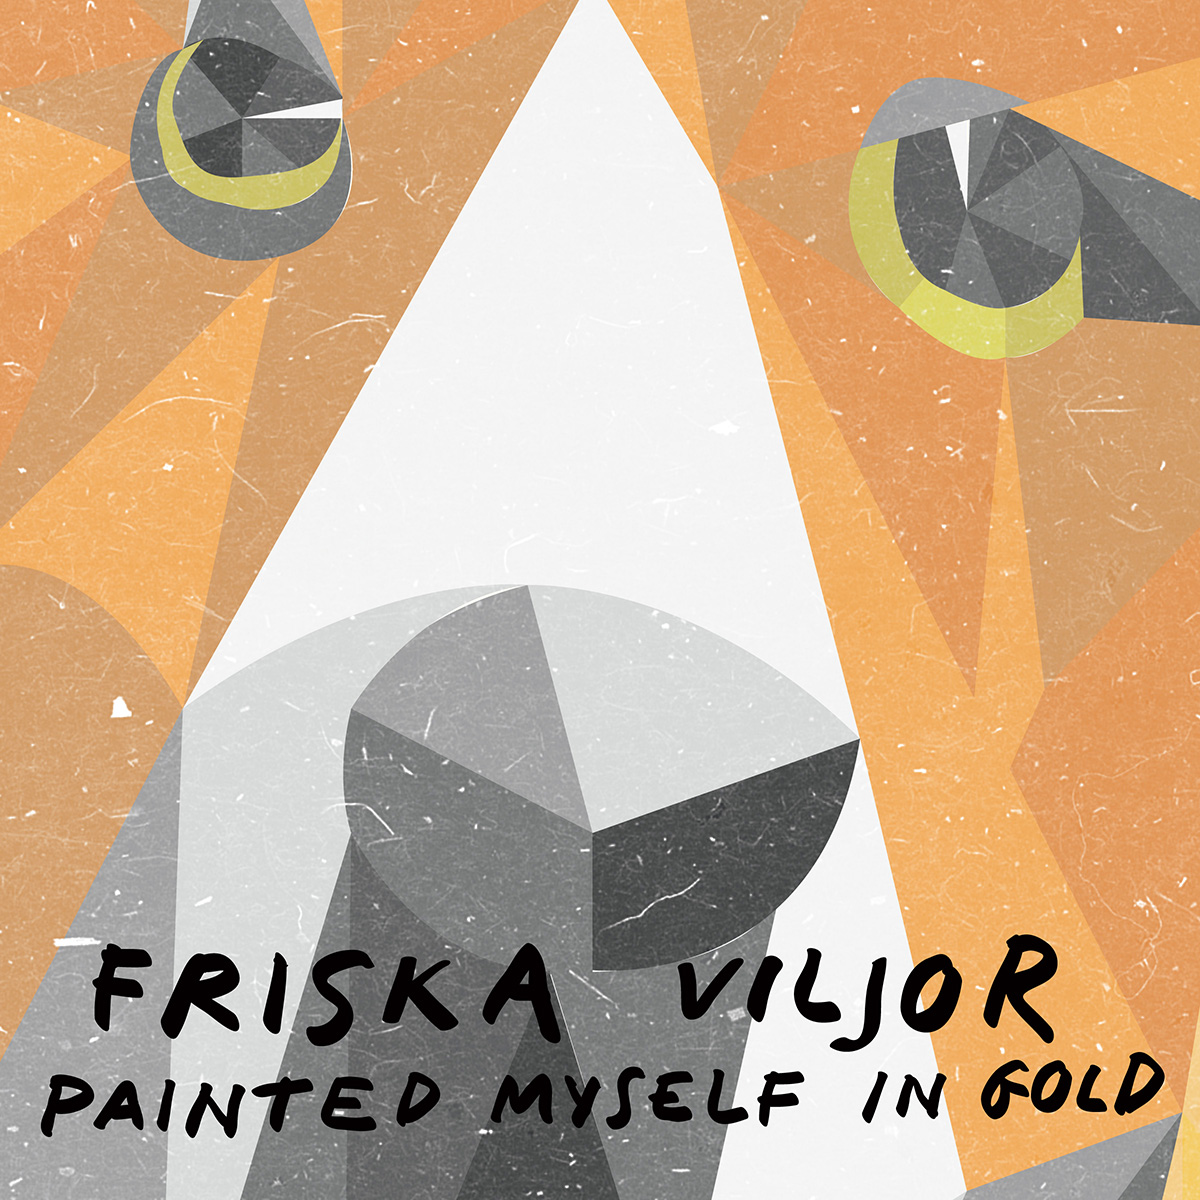 Friska Viljor - Painted Myself In Gold